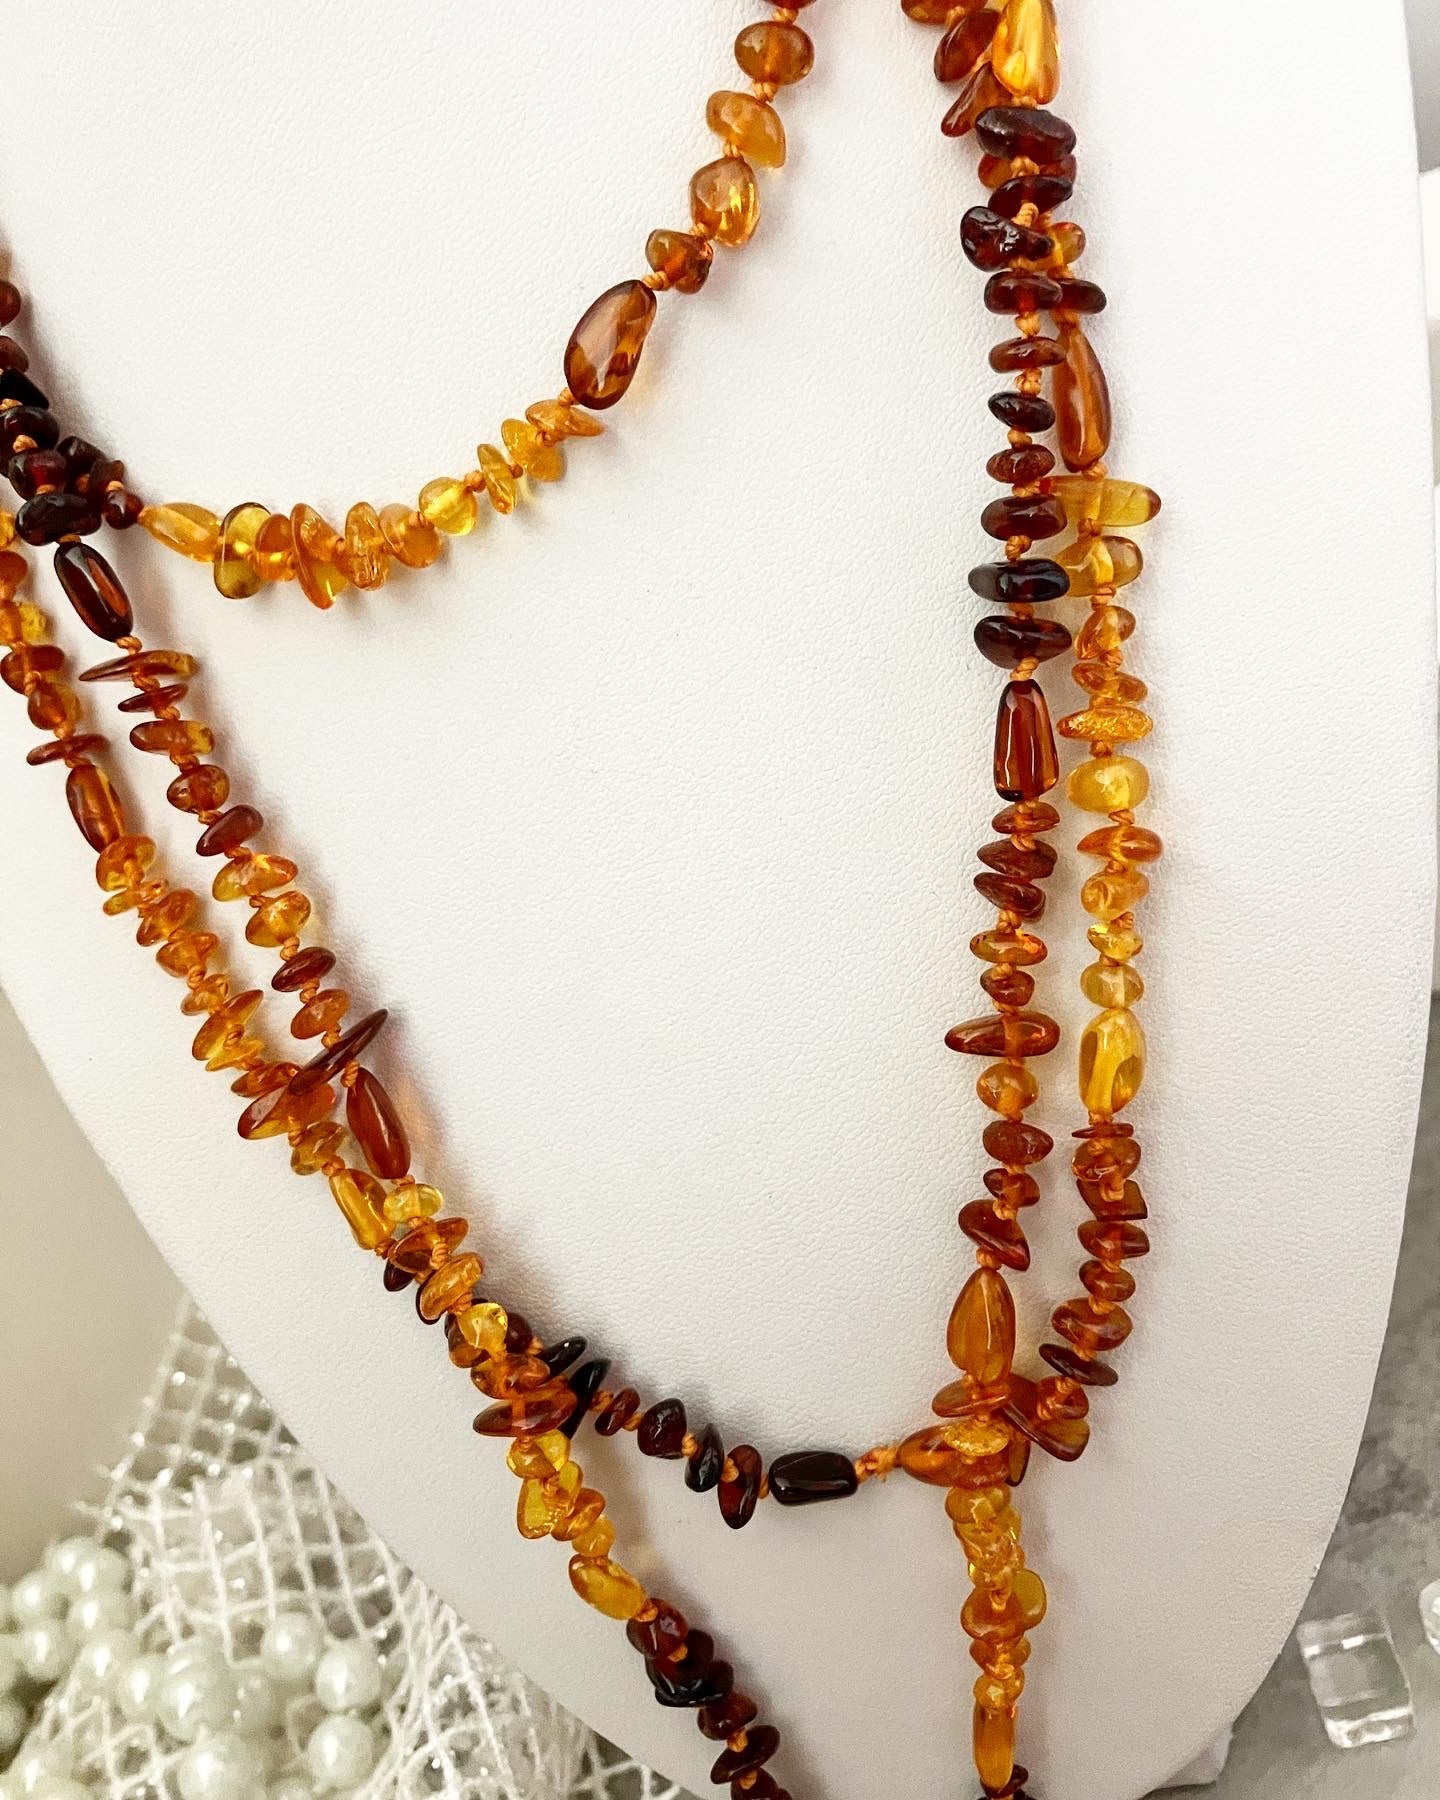 Long beads made of natural amber